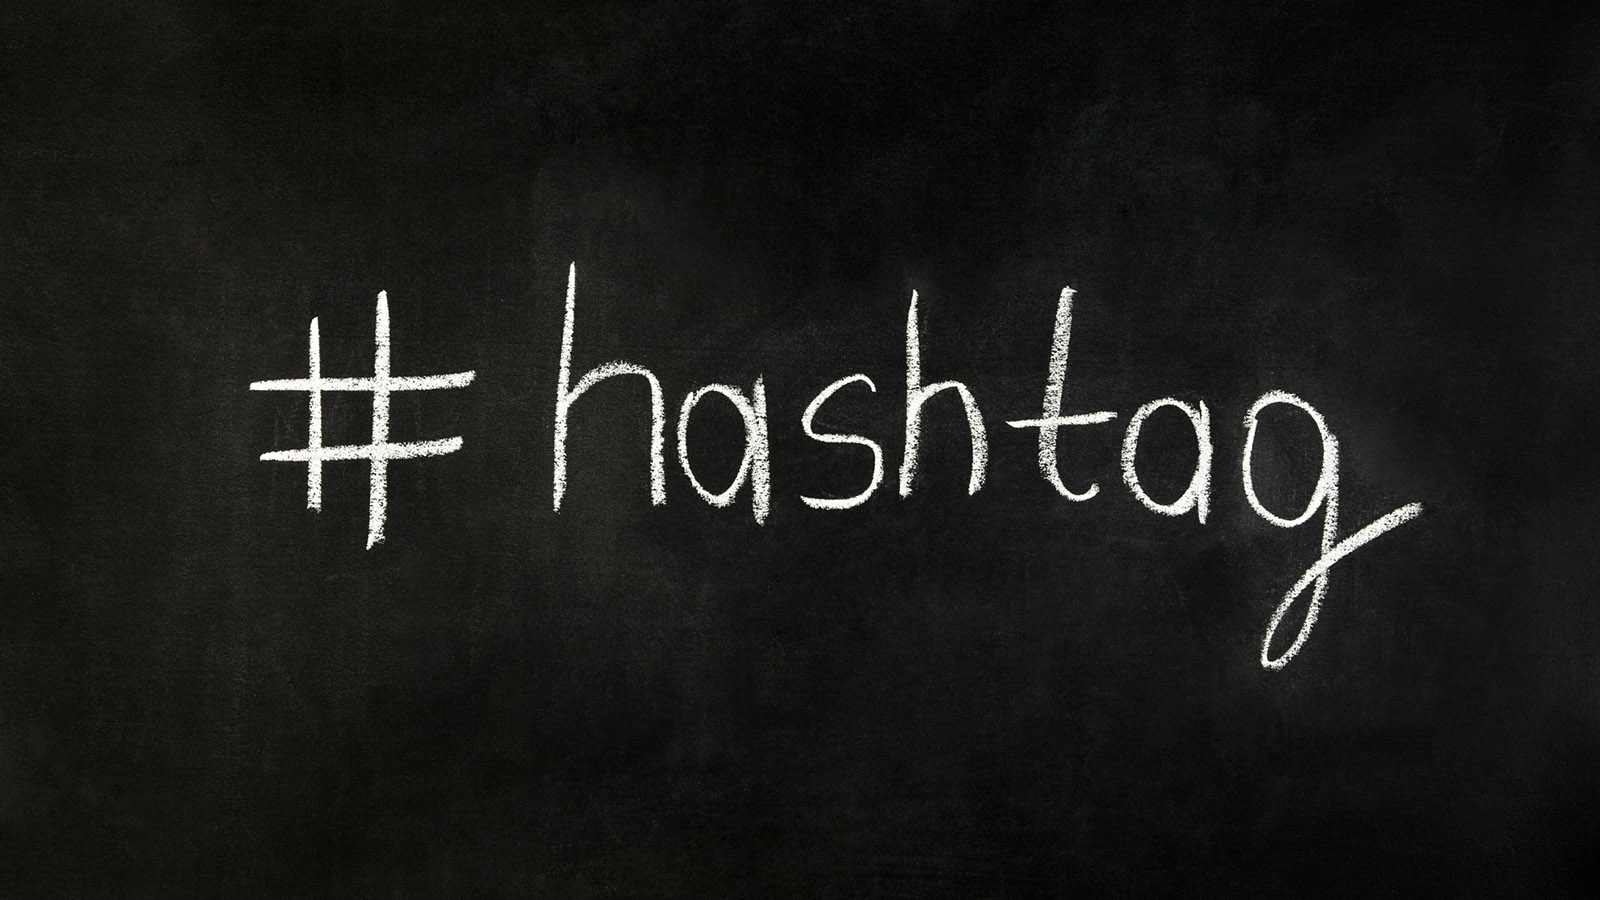 Hashtag-Featured